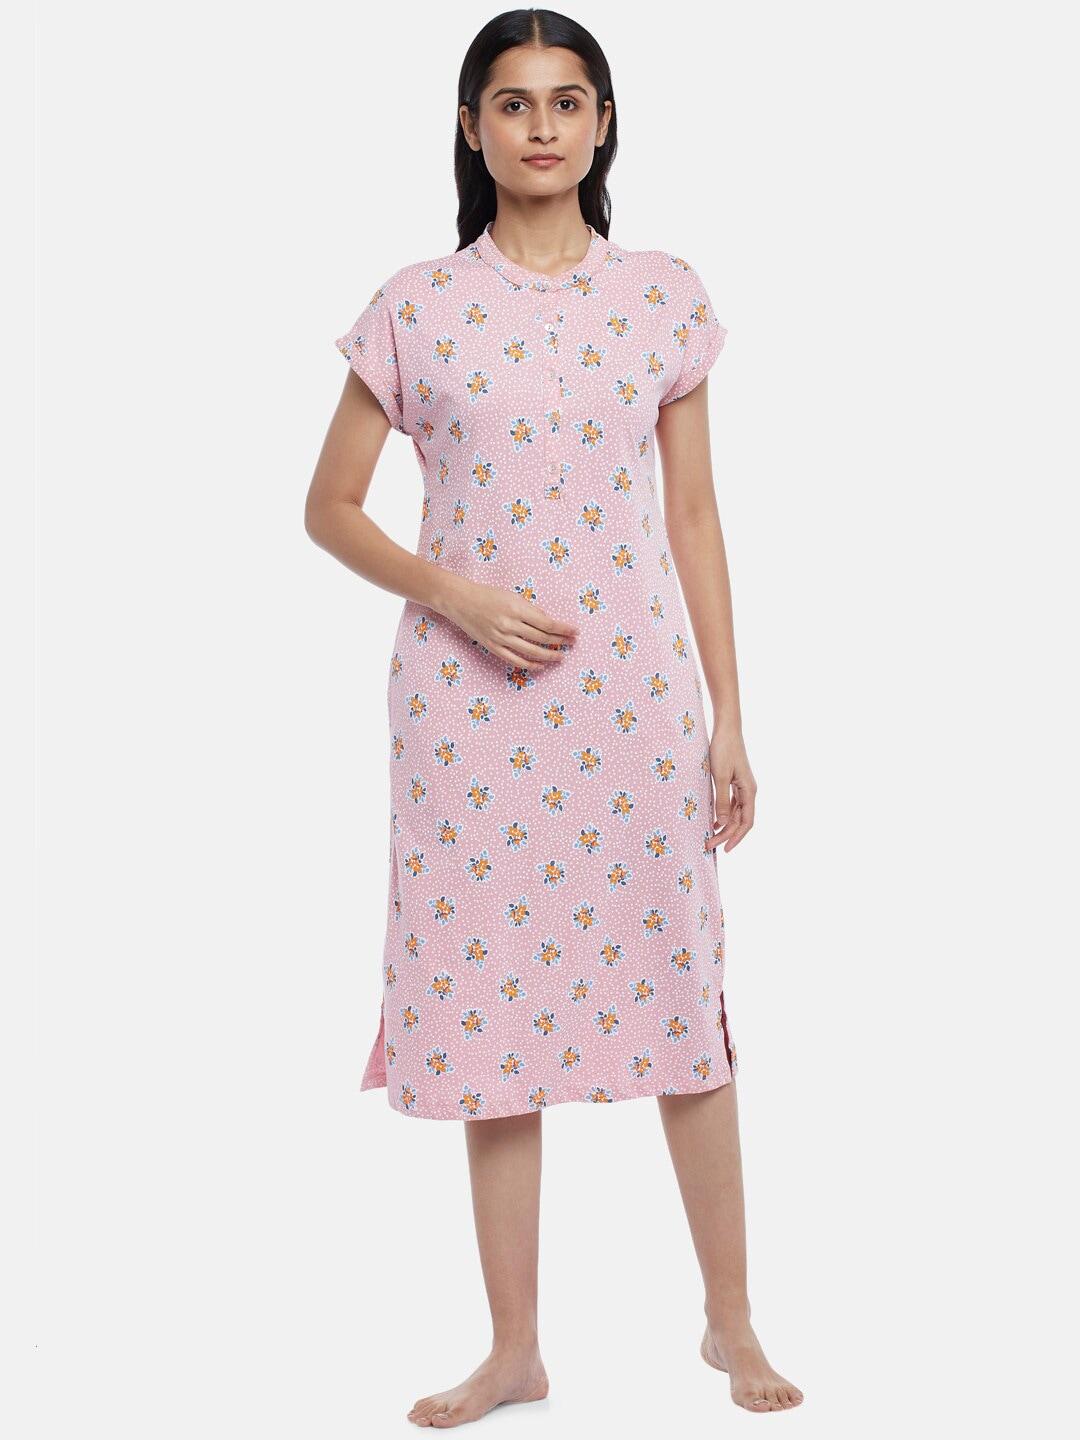 dreamz-by-pantaloons-pink-printed-nightdress